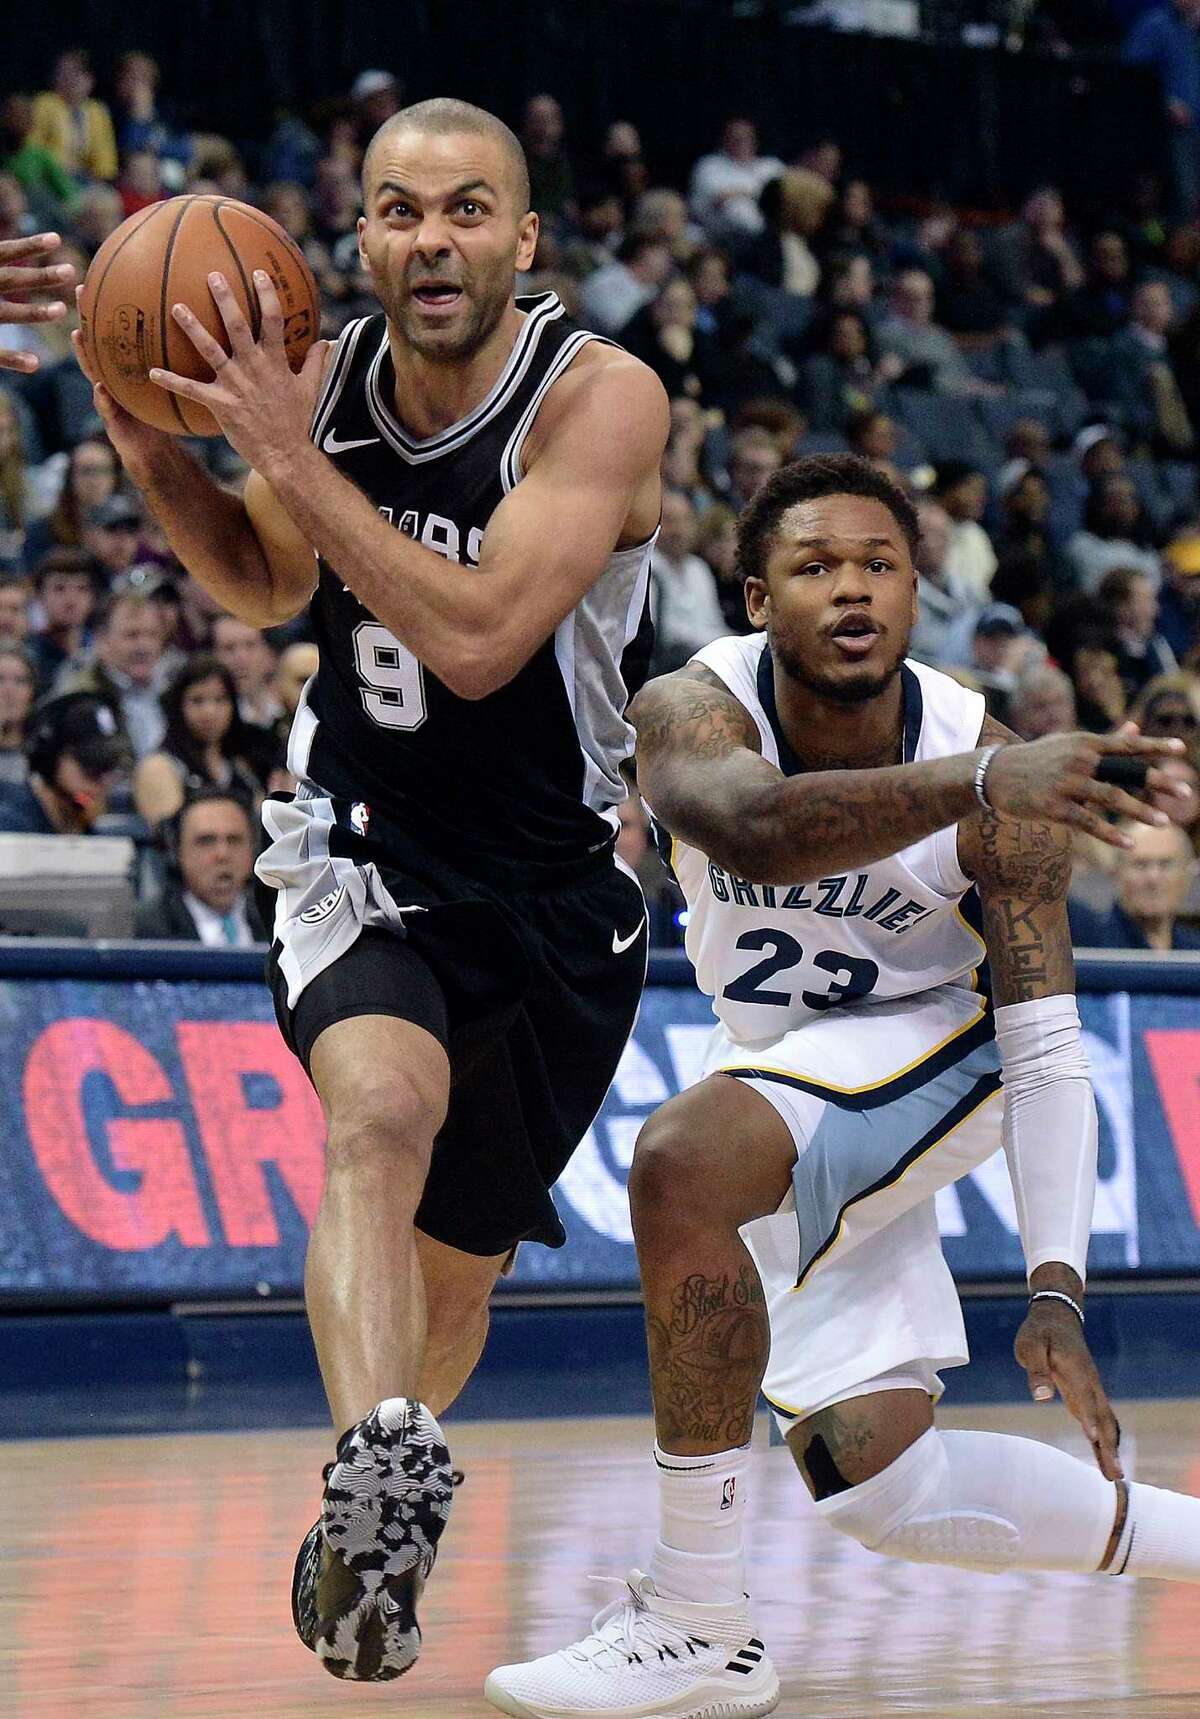 San Antonio Spurs guard Tony Parker (9) drives past Memphis Grizzlies guard Ben McLemore (23) during the second half of an NBA basketball game Wednesday, Jan. 24, 2018, in Memphis, Tenn. (AP Photo/Brandon Dill)